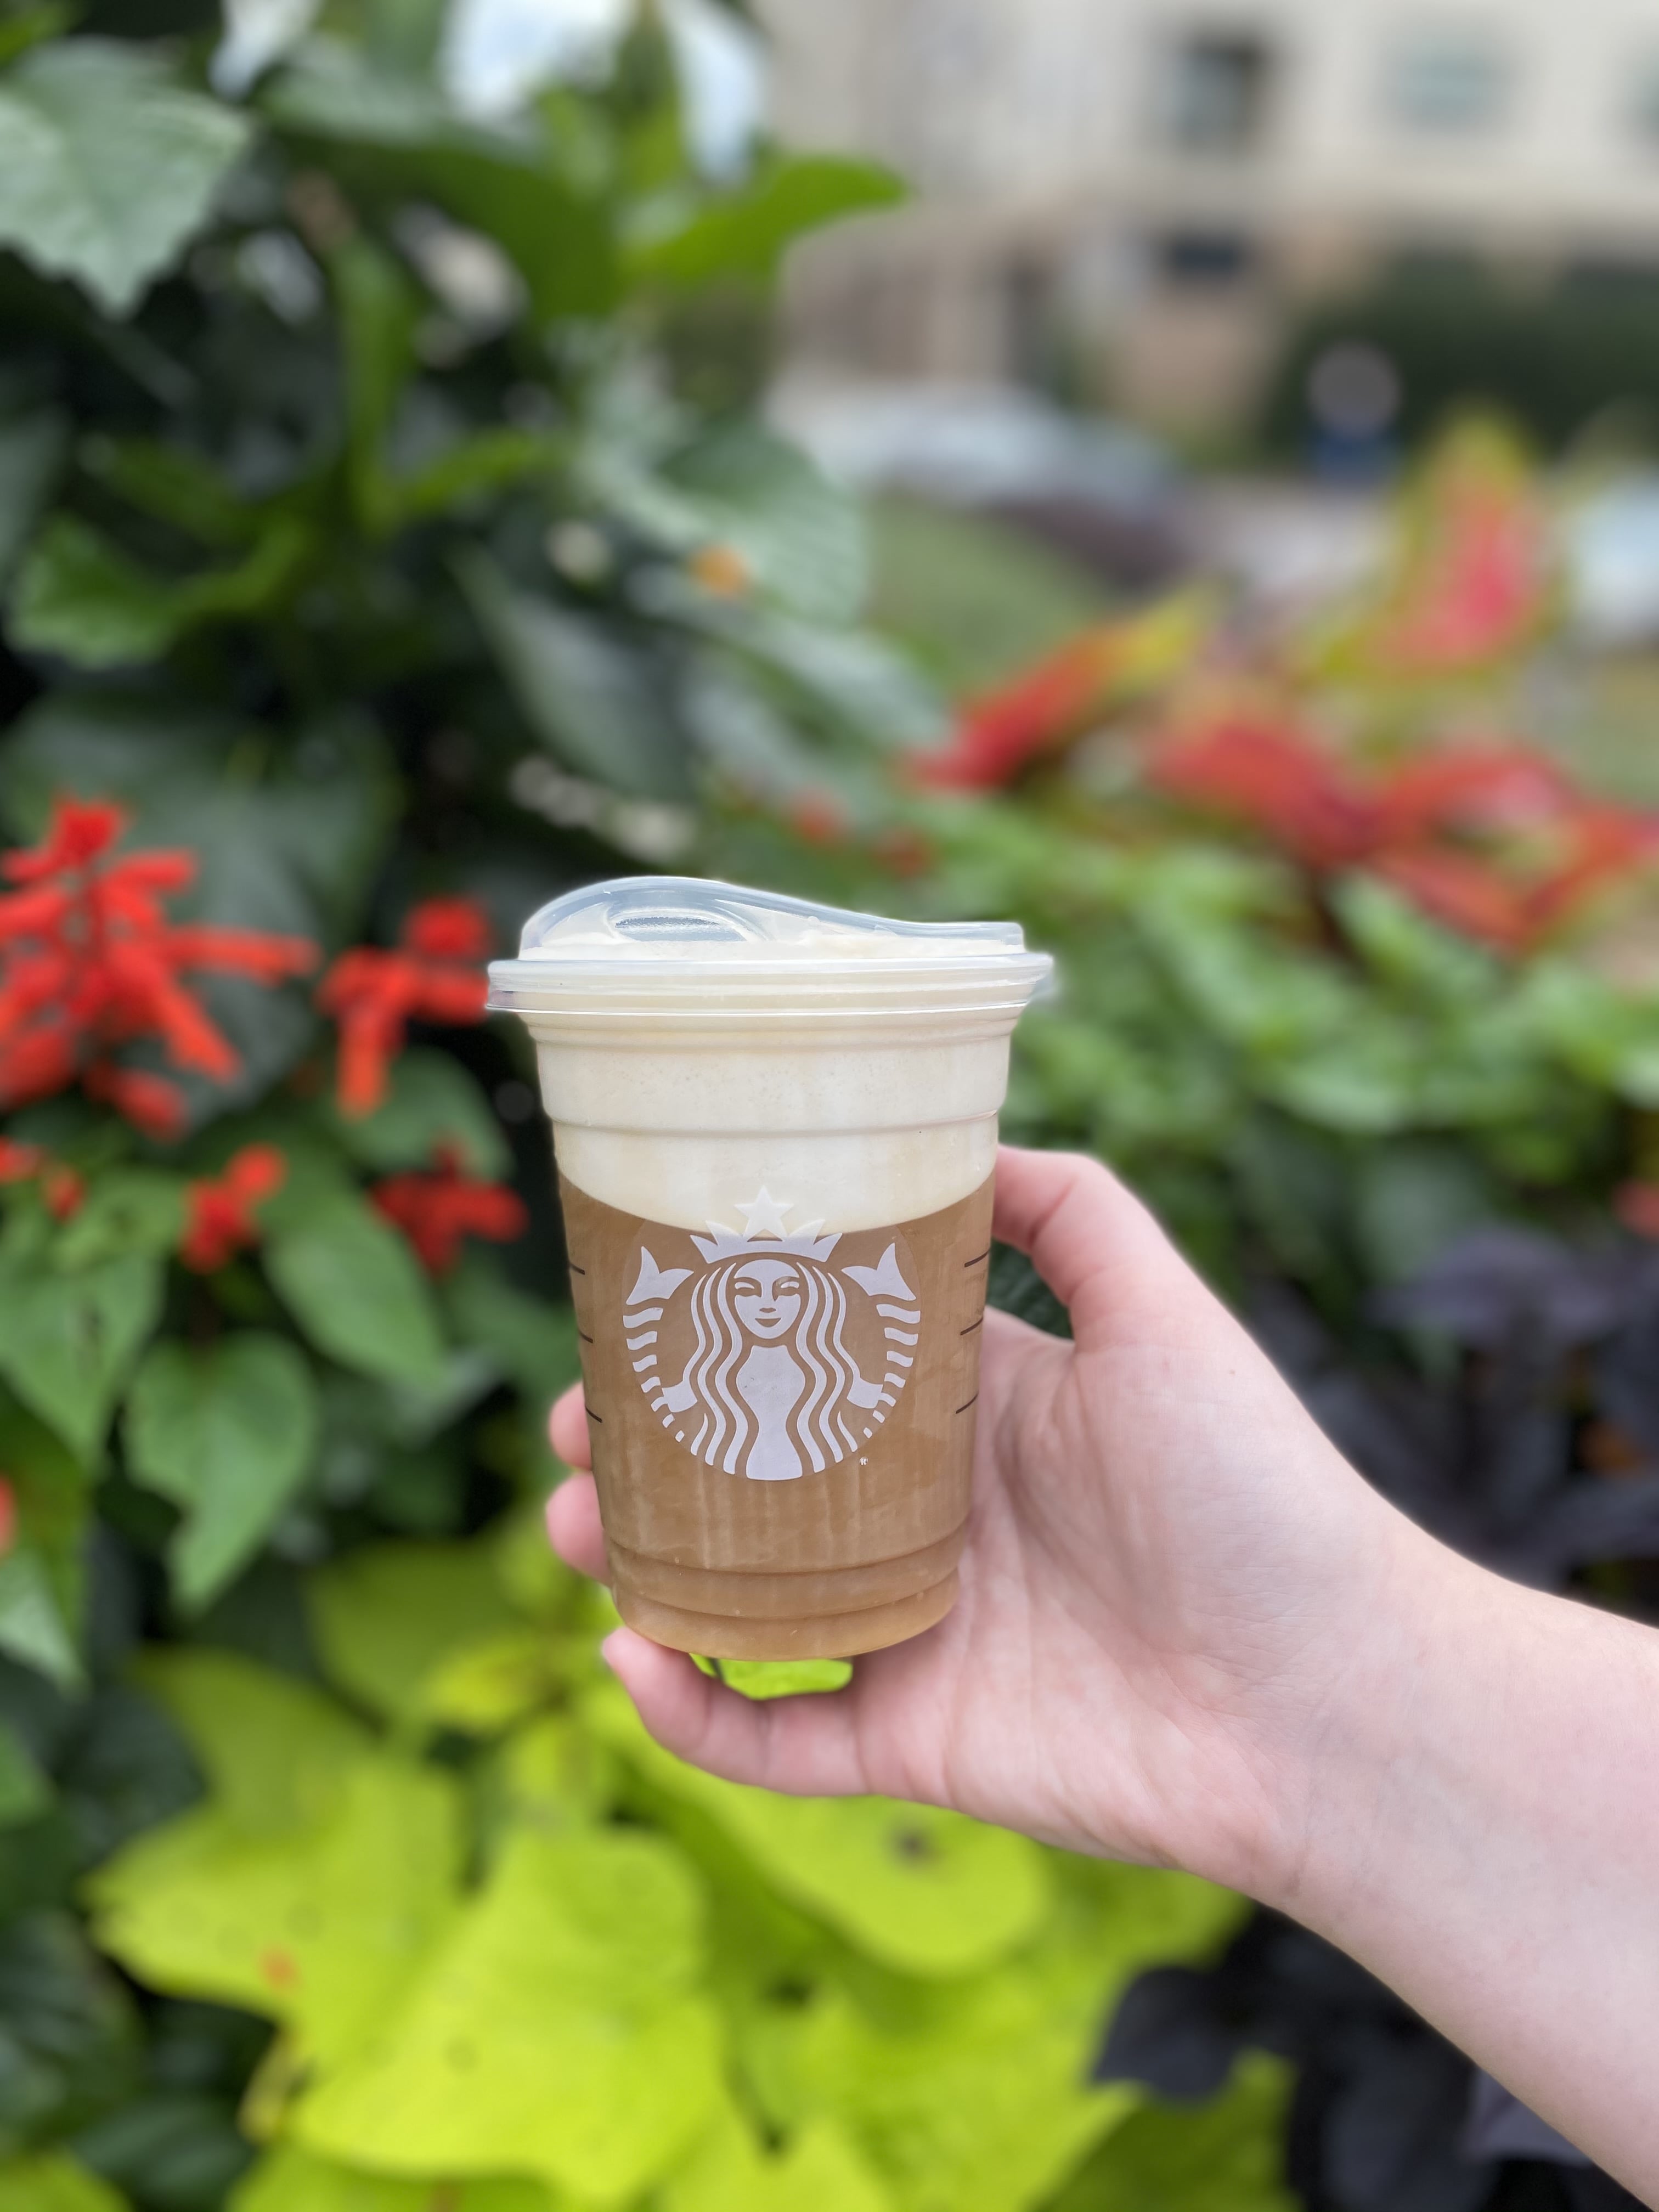 Review: We Tried Starbucks' New Cinnamon Caramel Cream Nitro Cold Brew